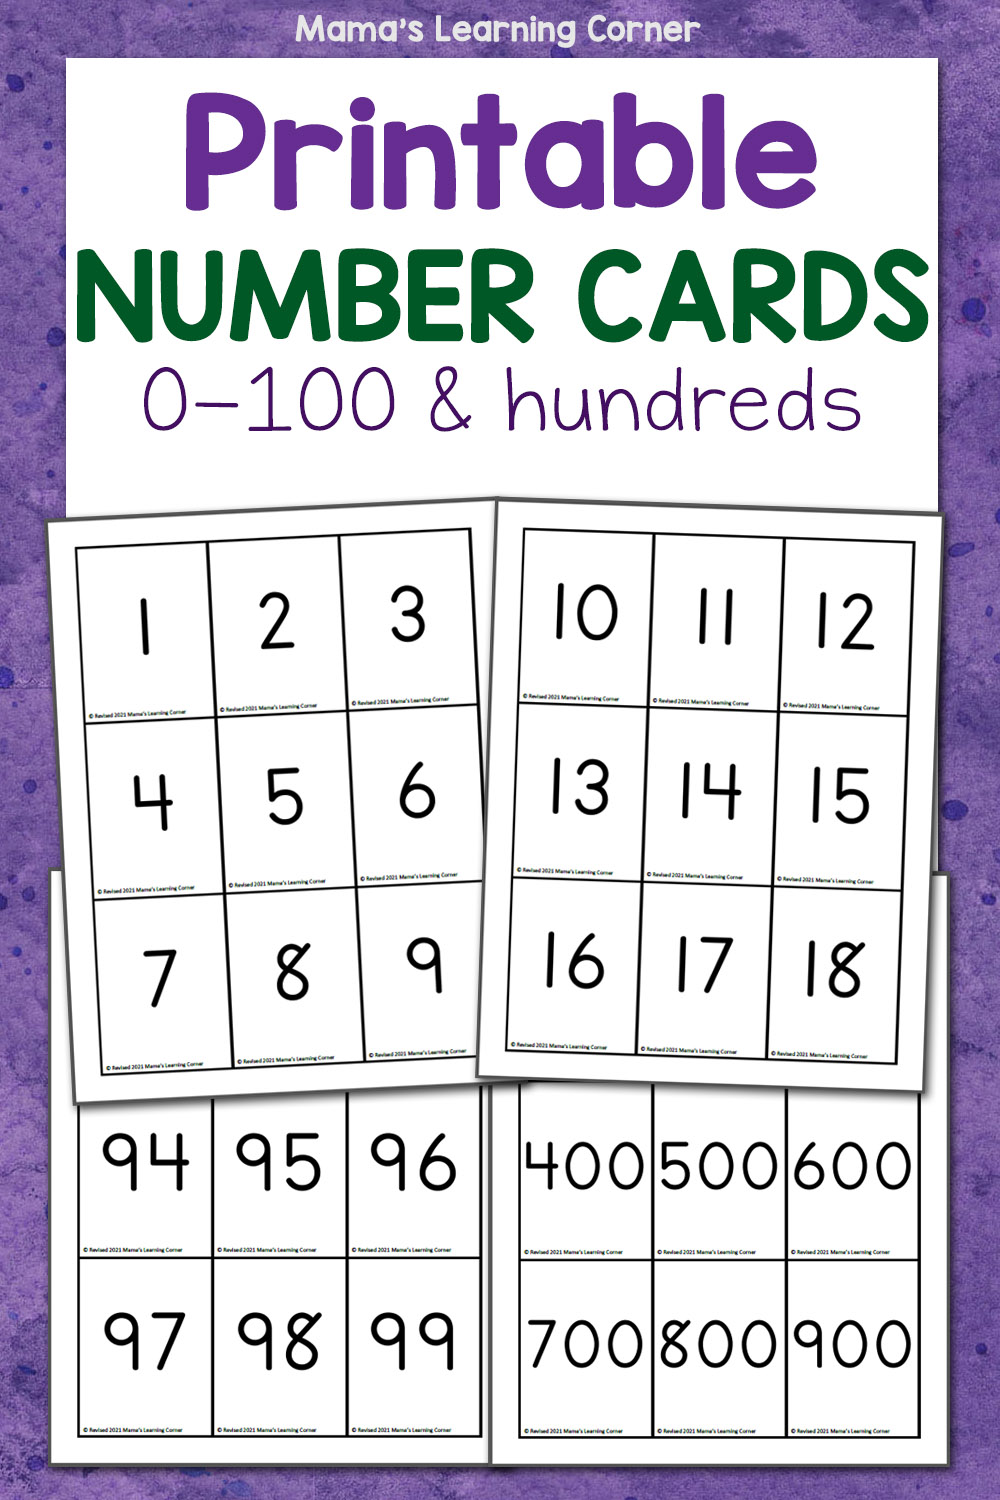 number-cards-printable